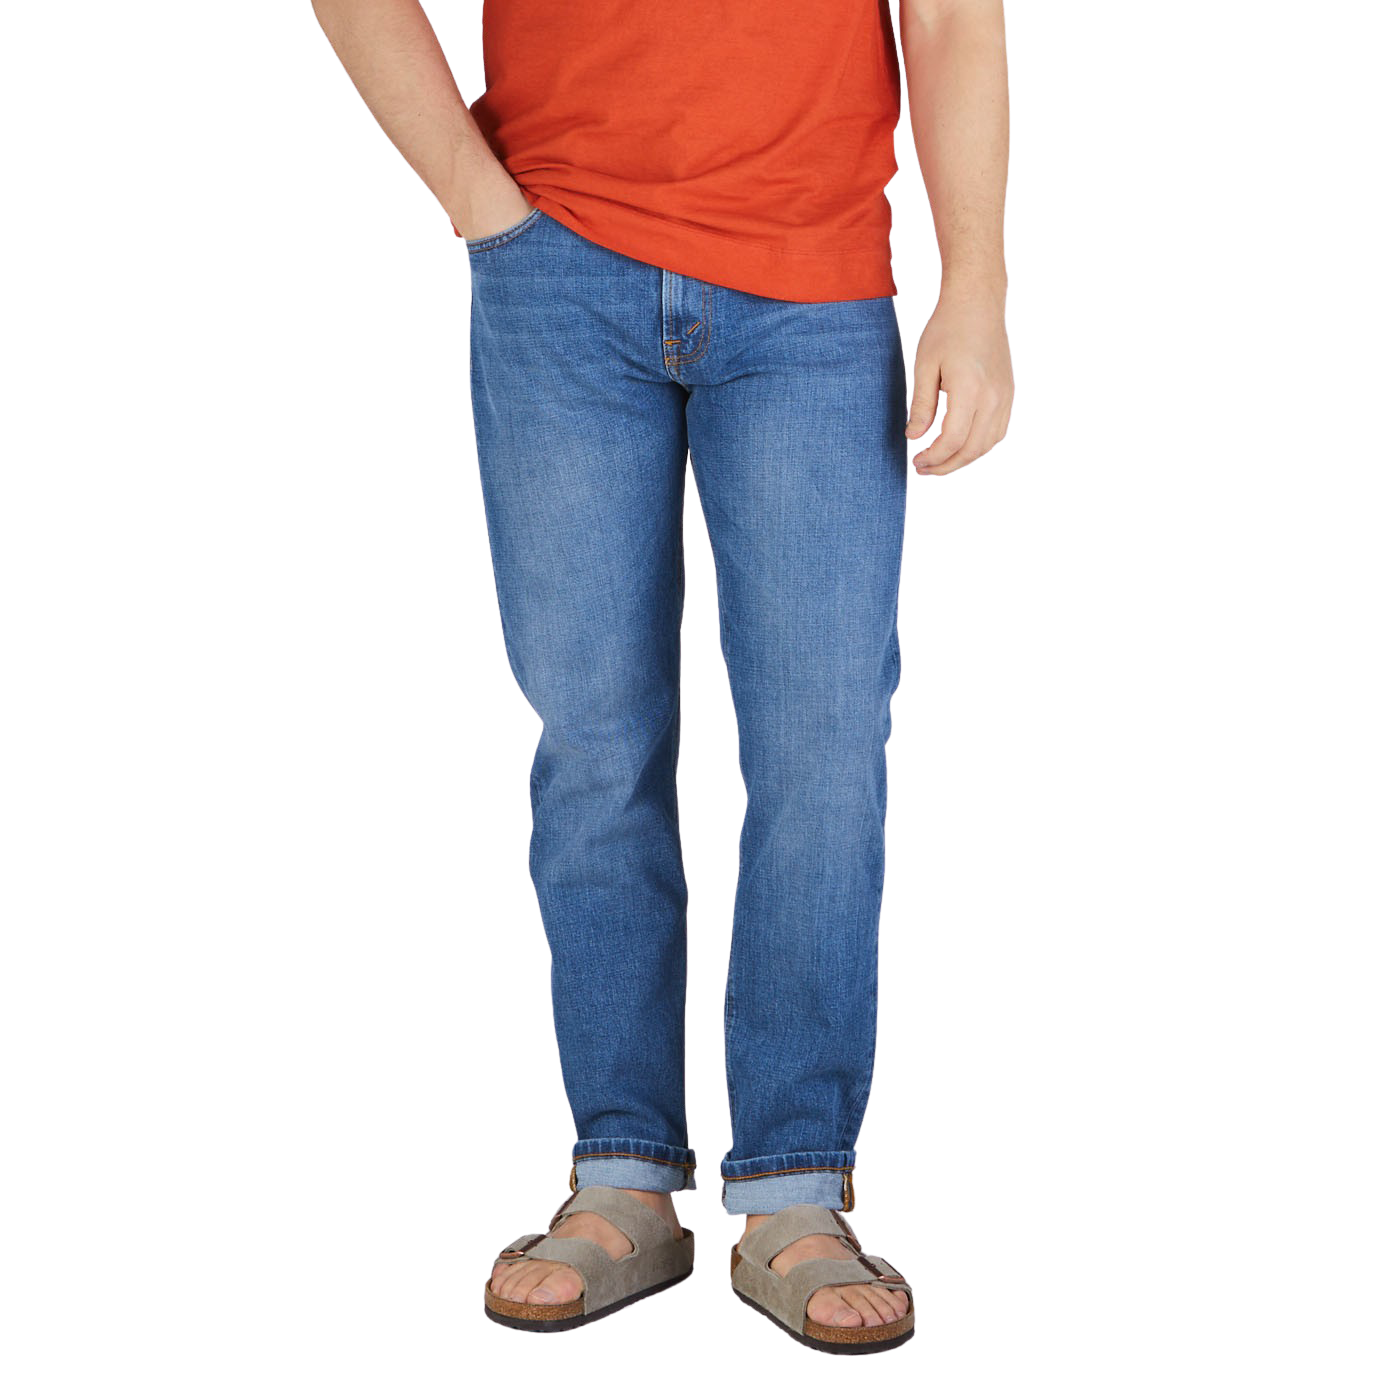 D'fourteen Regular Fit Men Cotton Jeans, Plain, Lycra at Rs 649/piece in  Ahmedabad